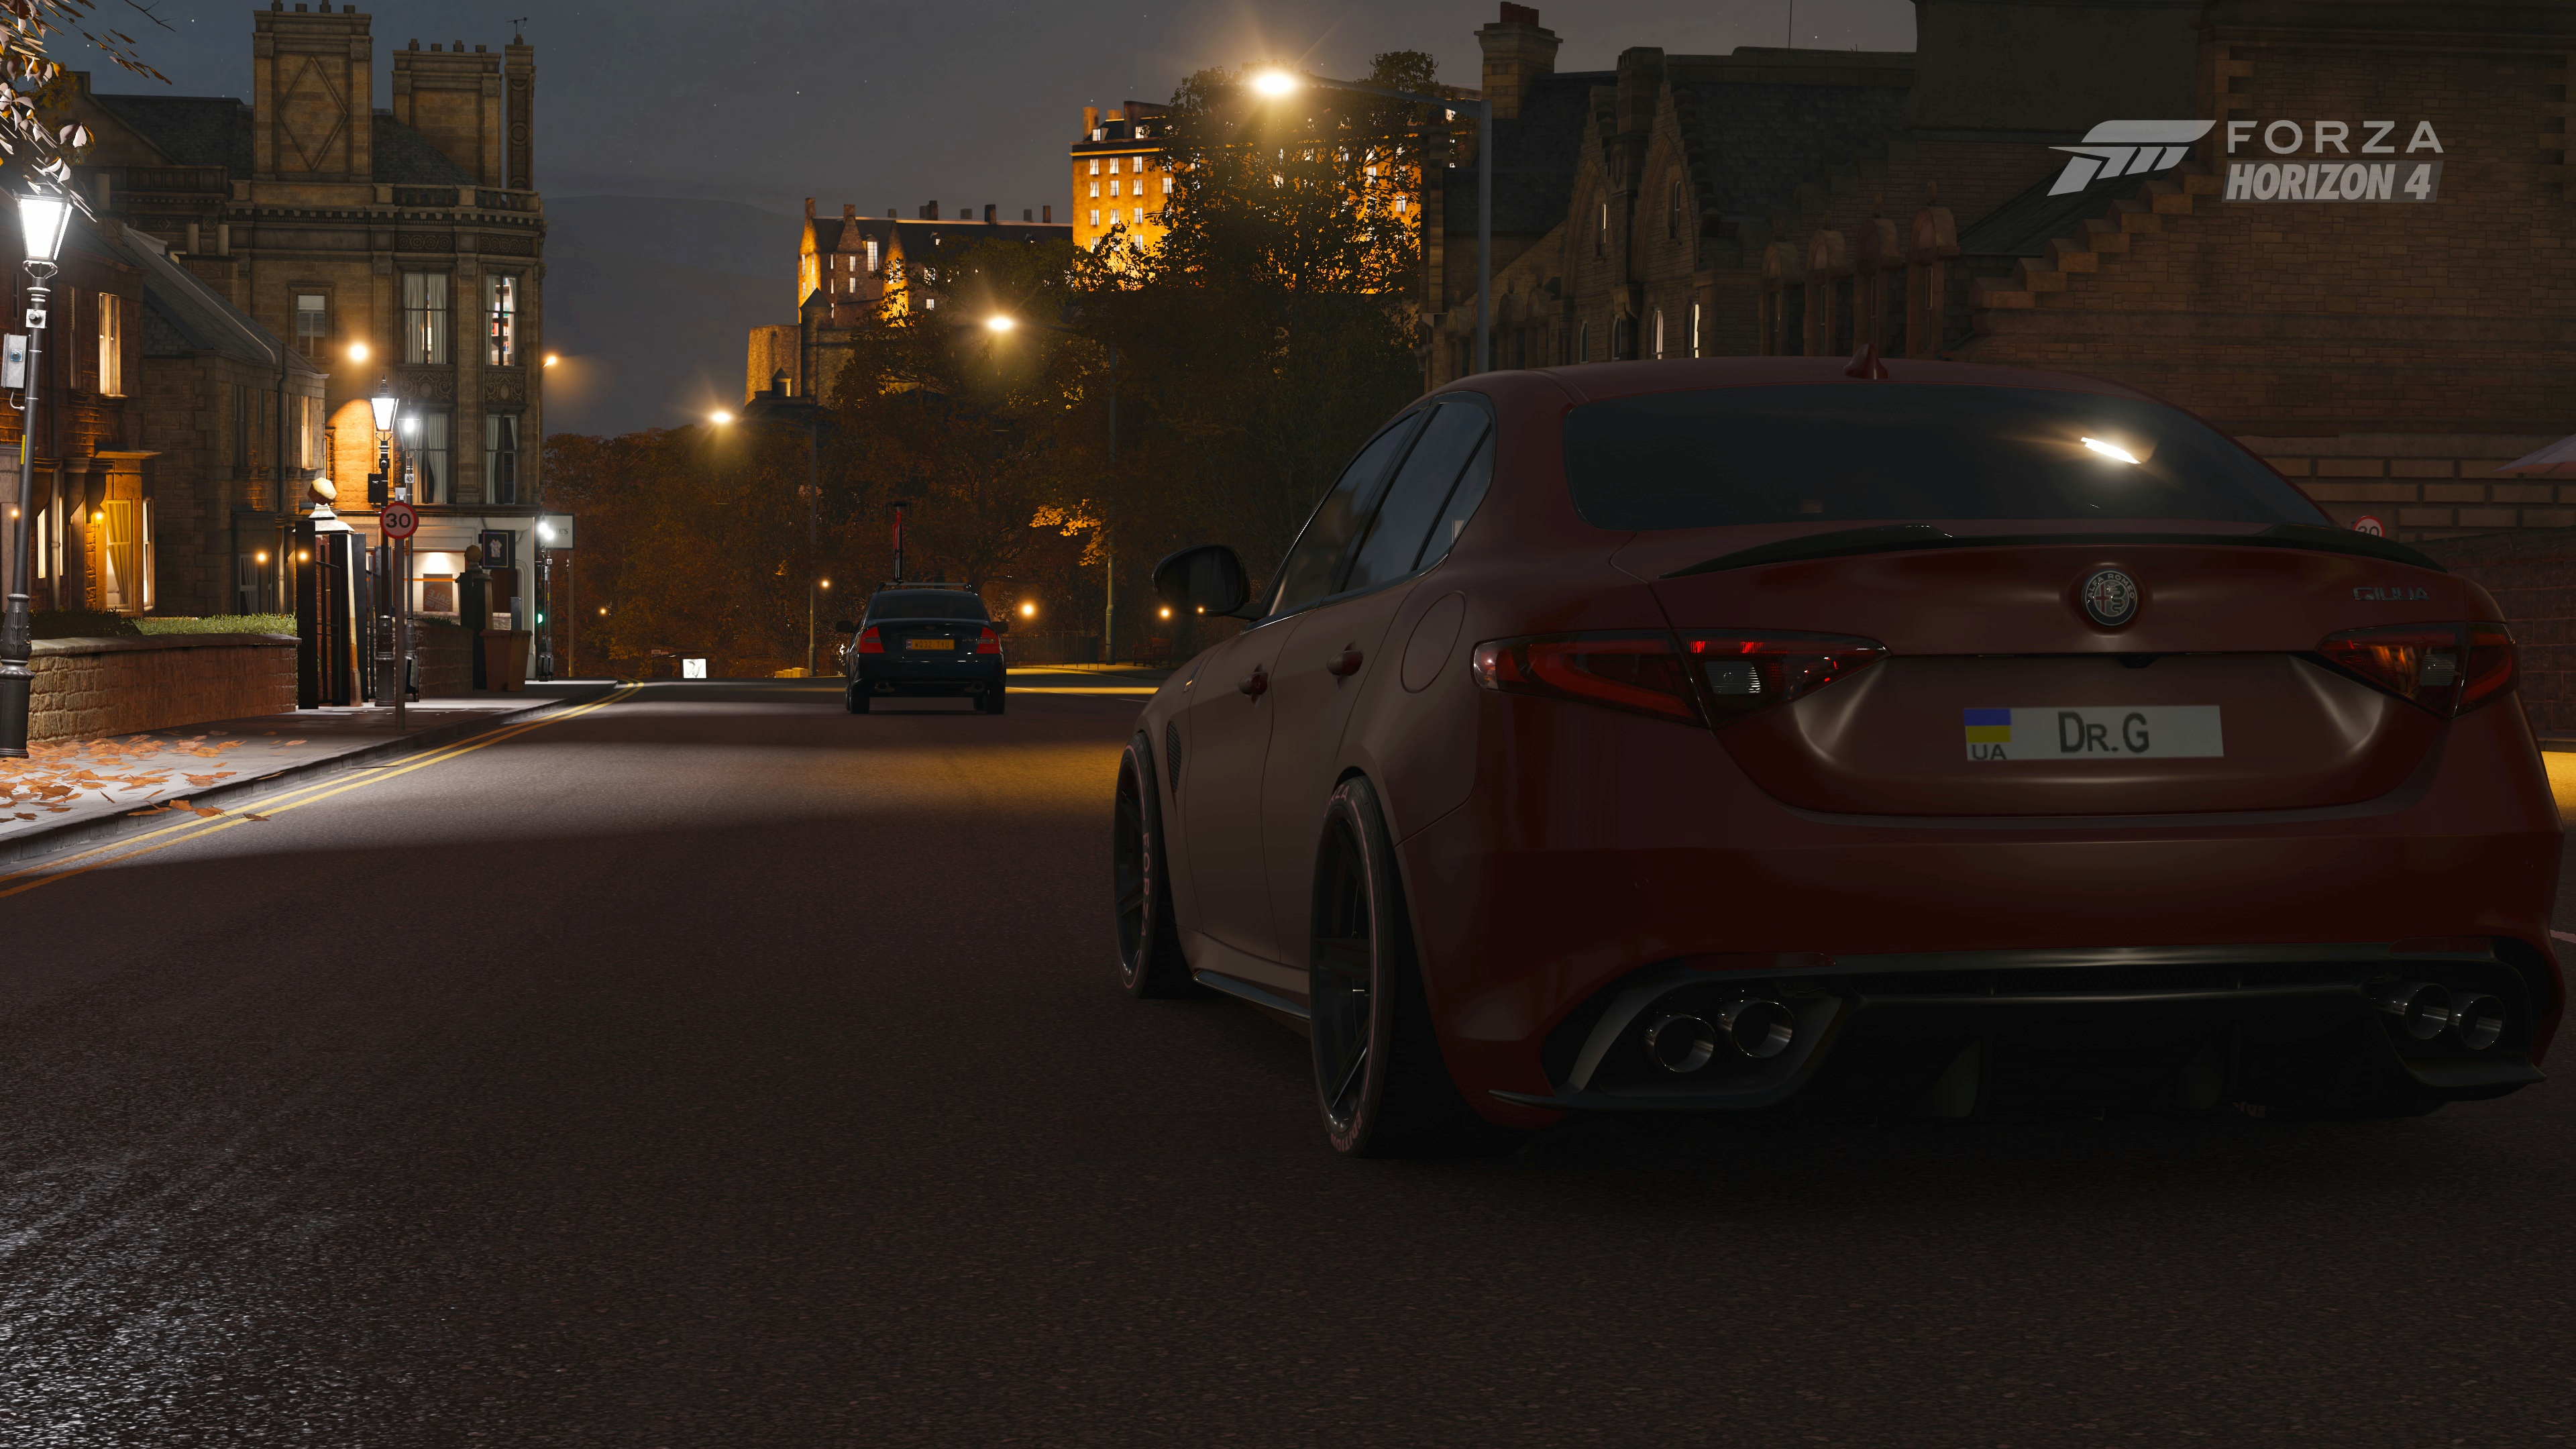 General 3840x2160 Alfa Romeo Giulia car night city Forza Horizon 4 video game art watermarked video games